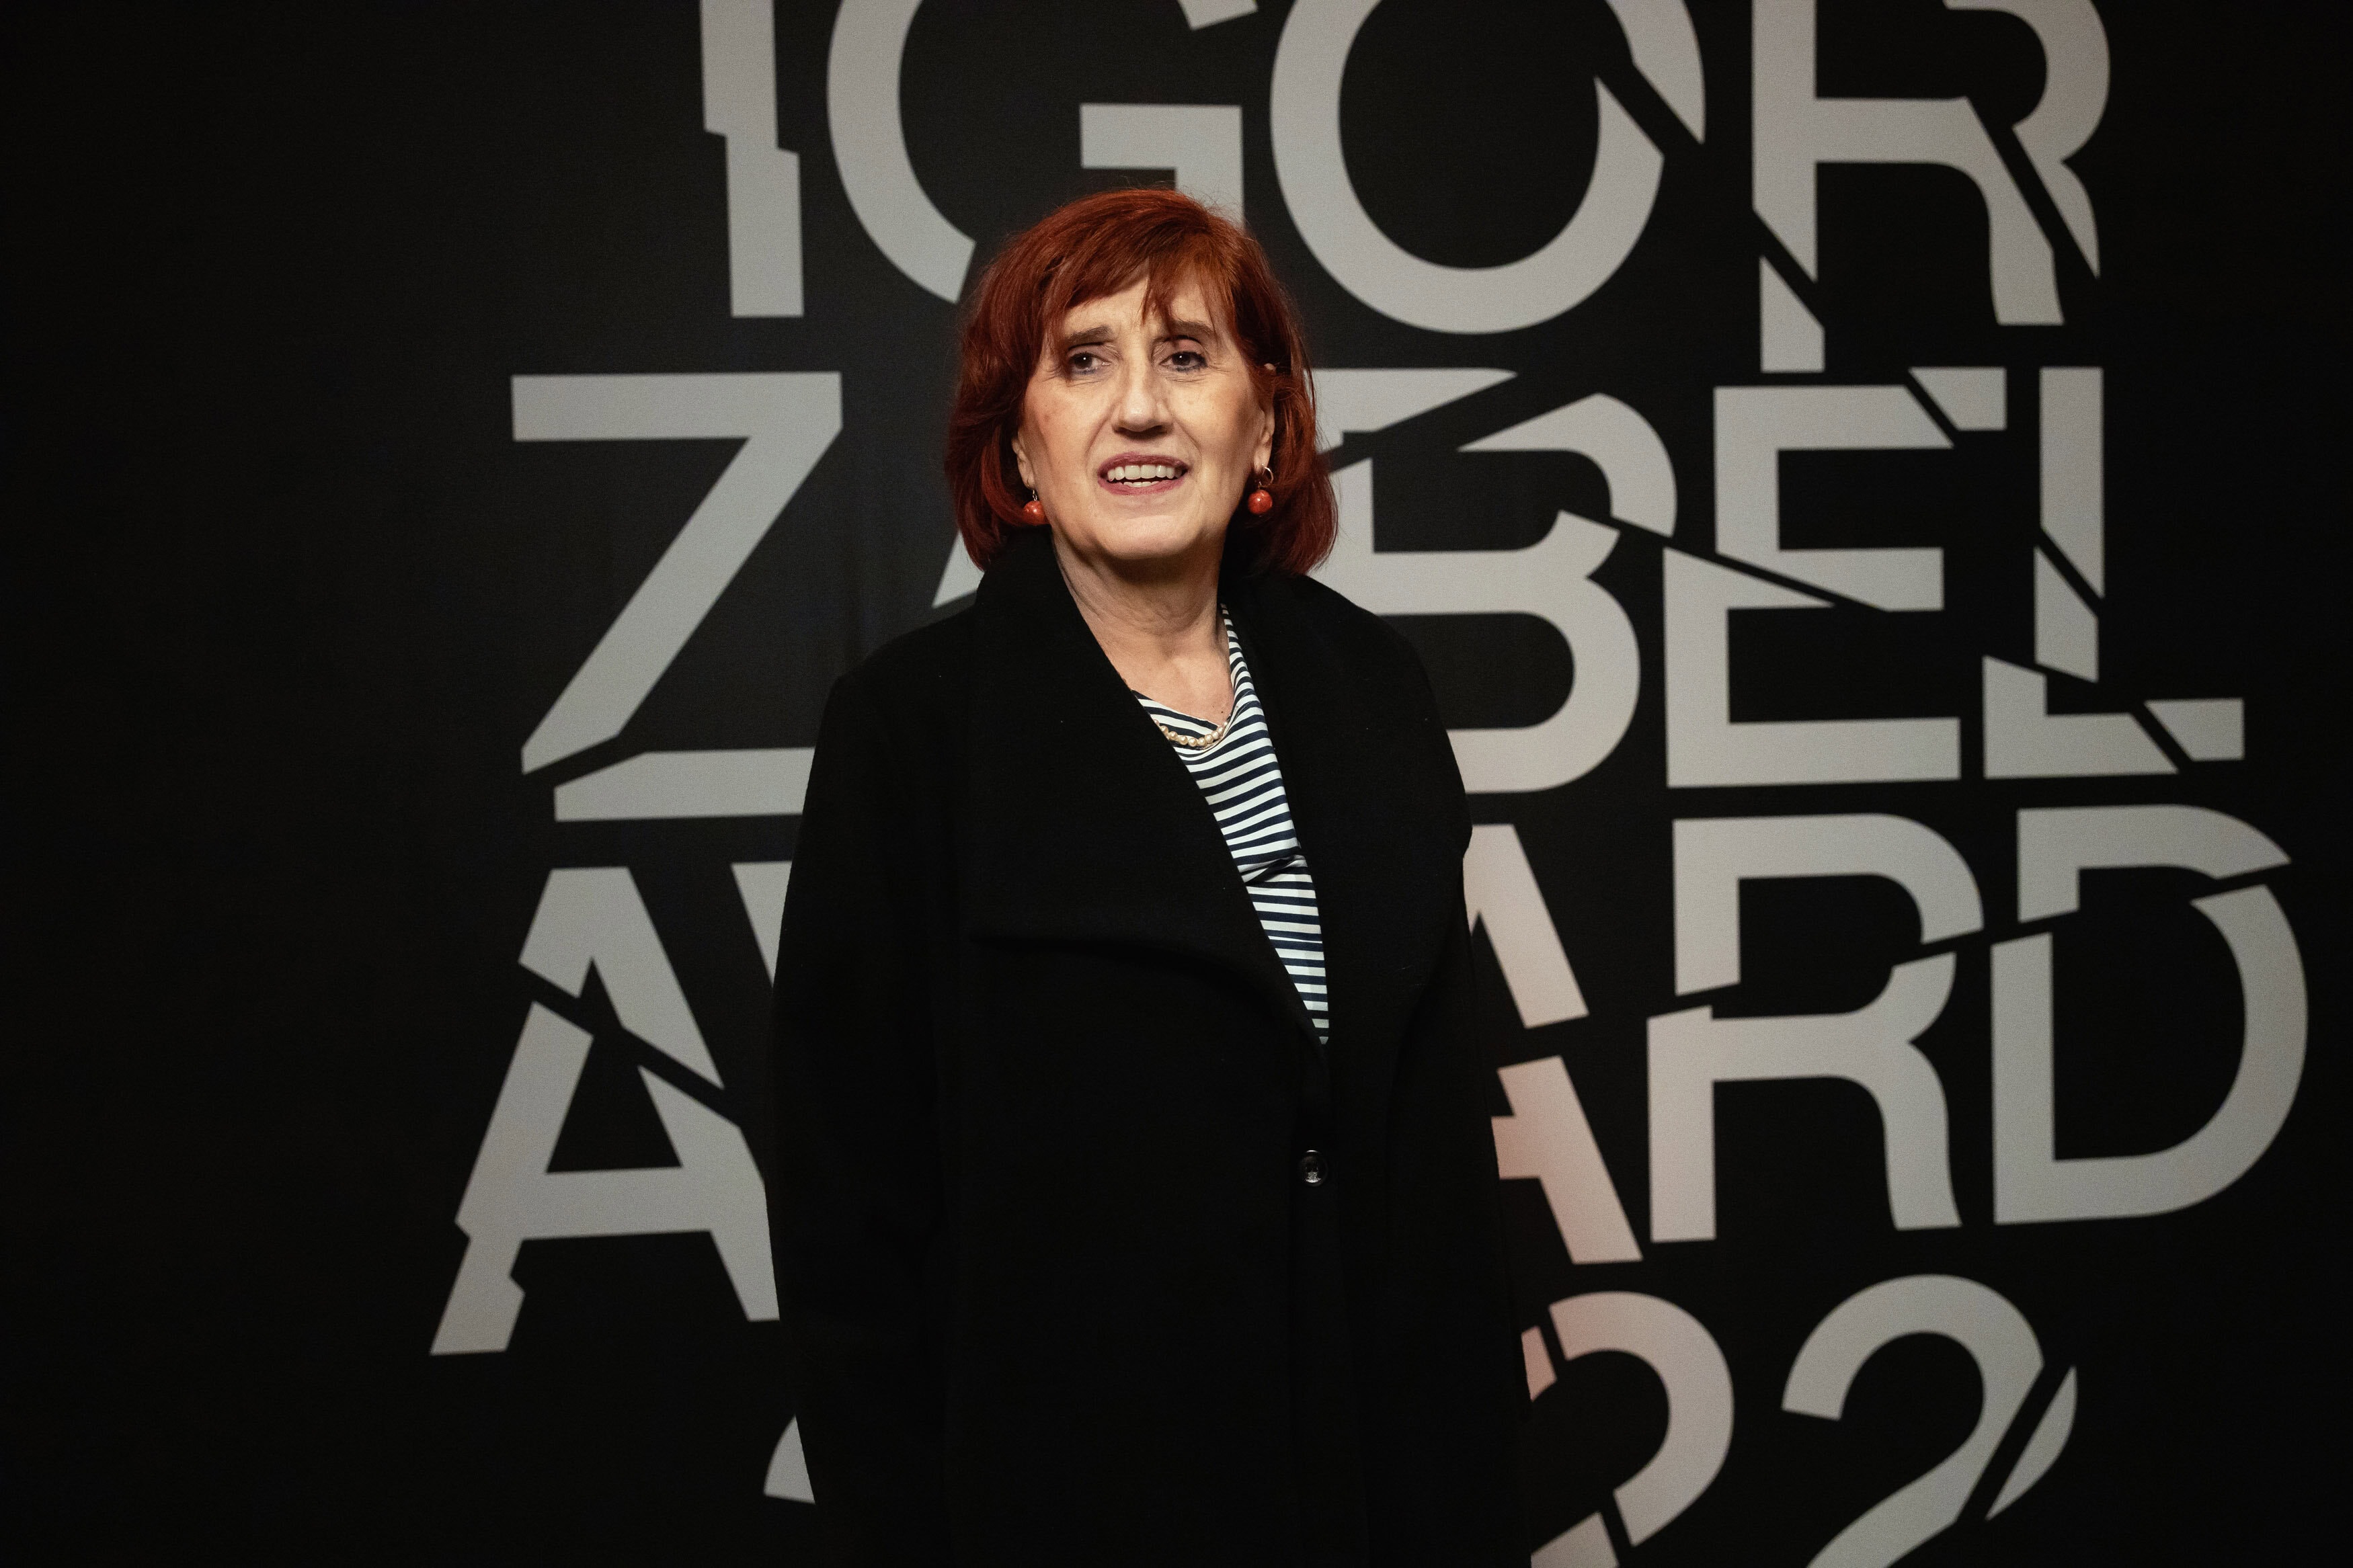 Bojana Pejić, winner of the Igor Zabel Award for Culture and Theory 2022. Photo: Nada Žgank